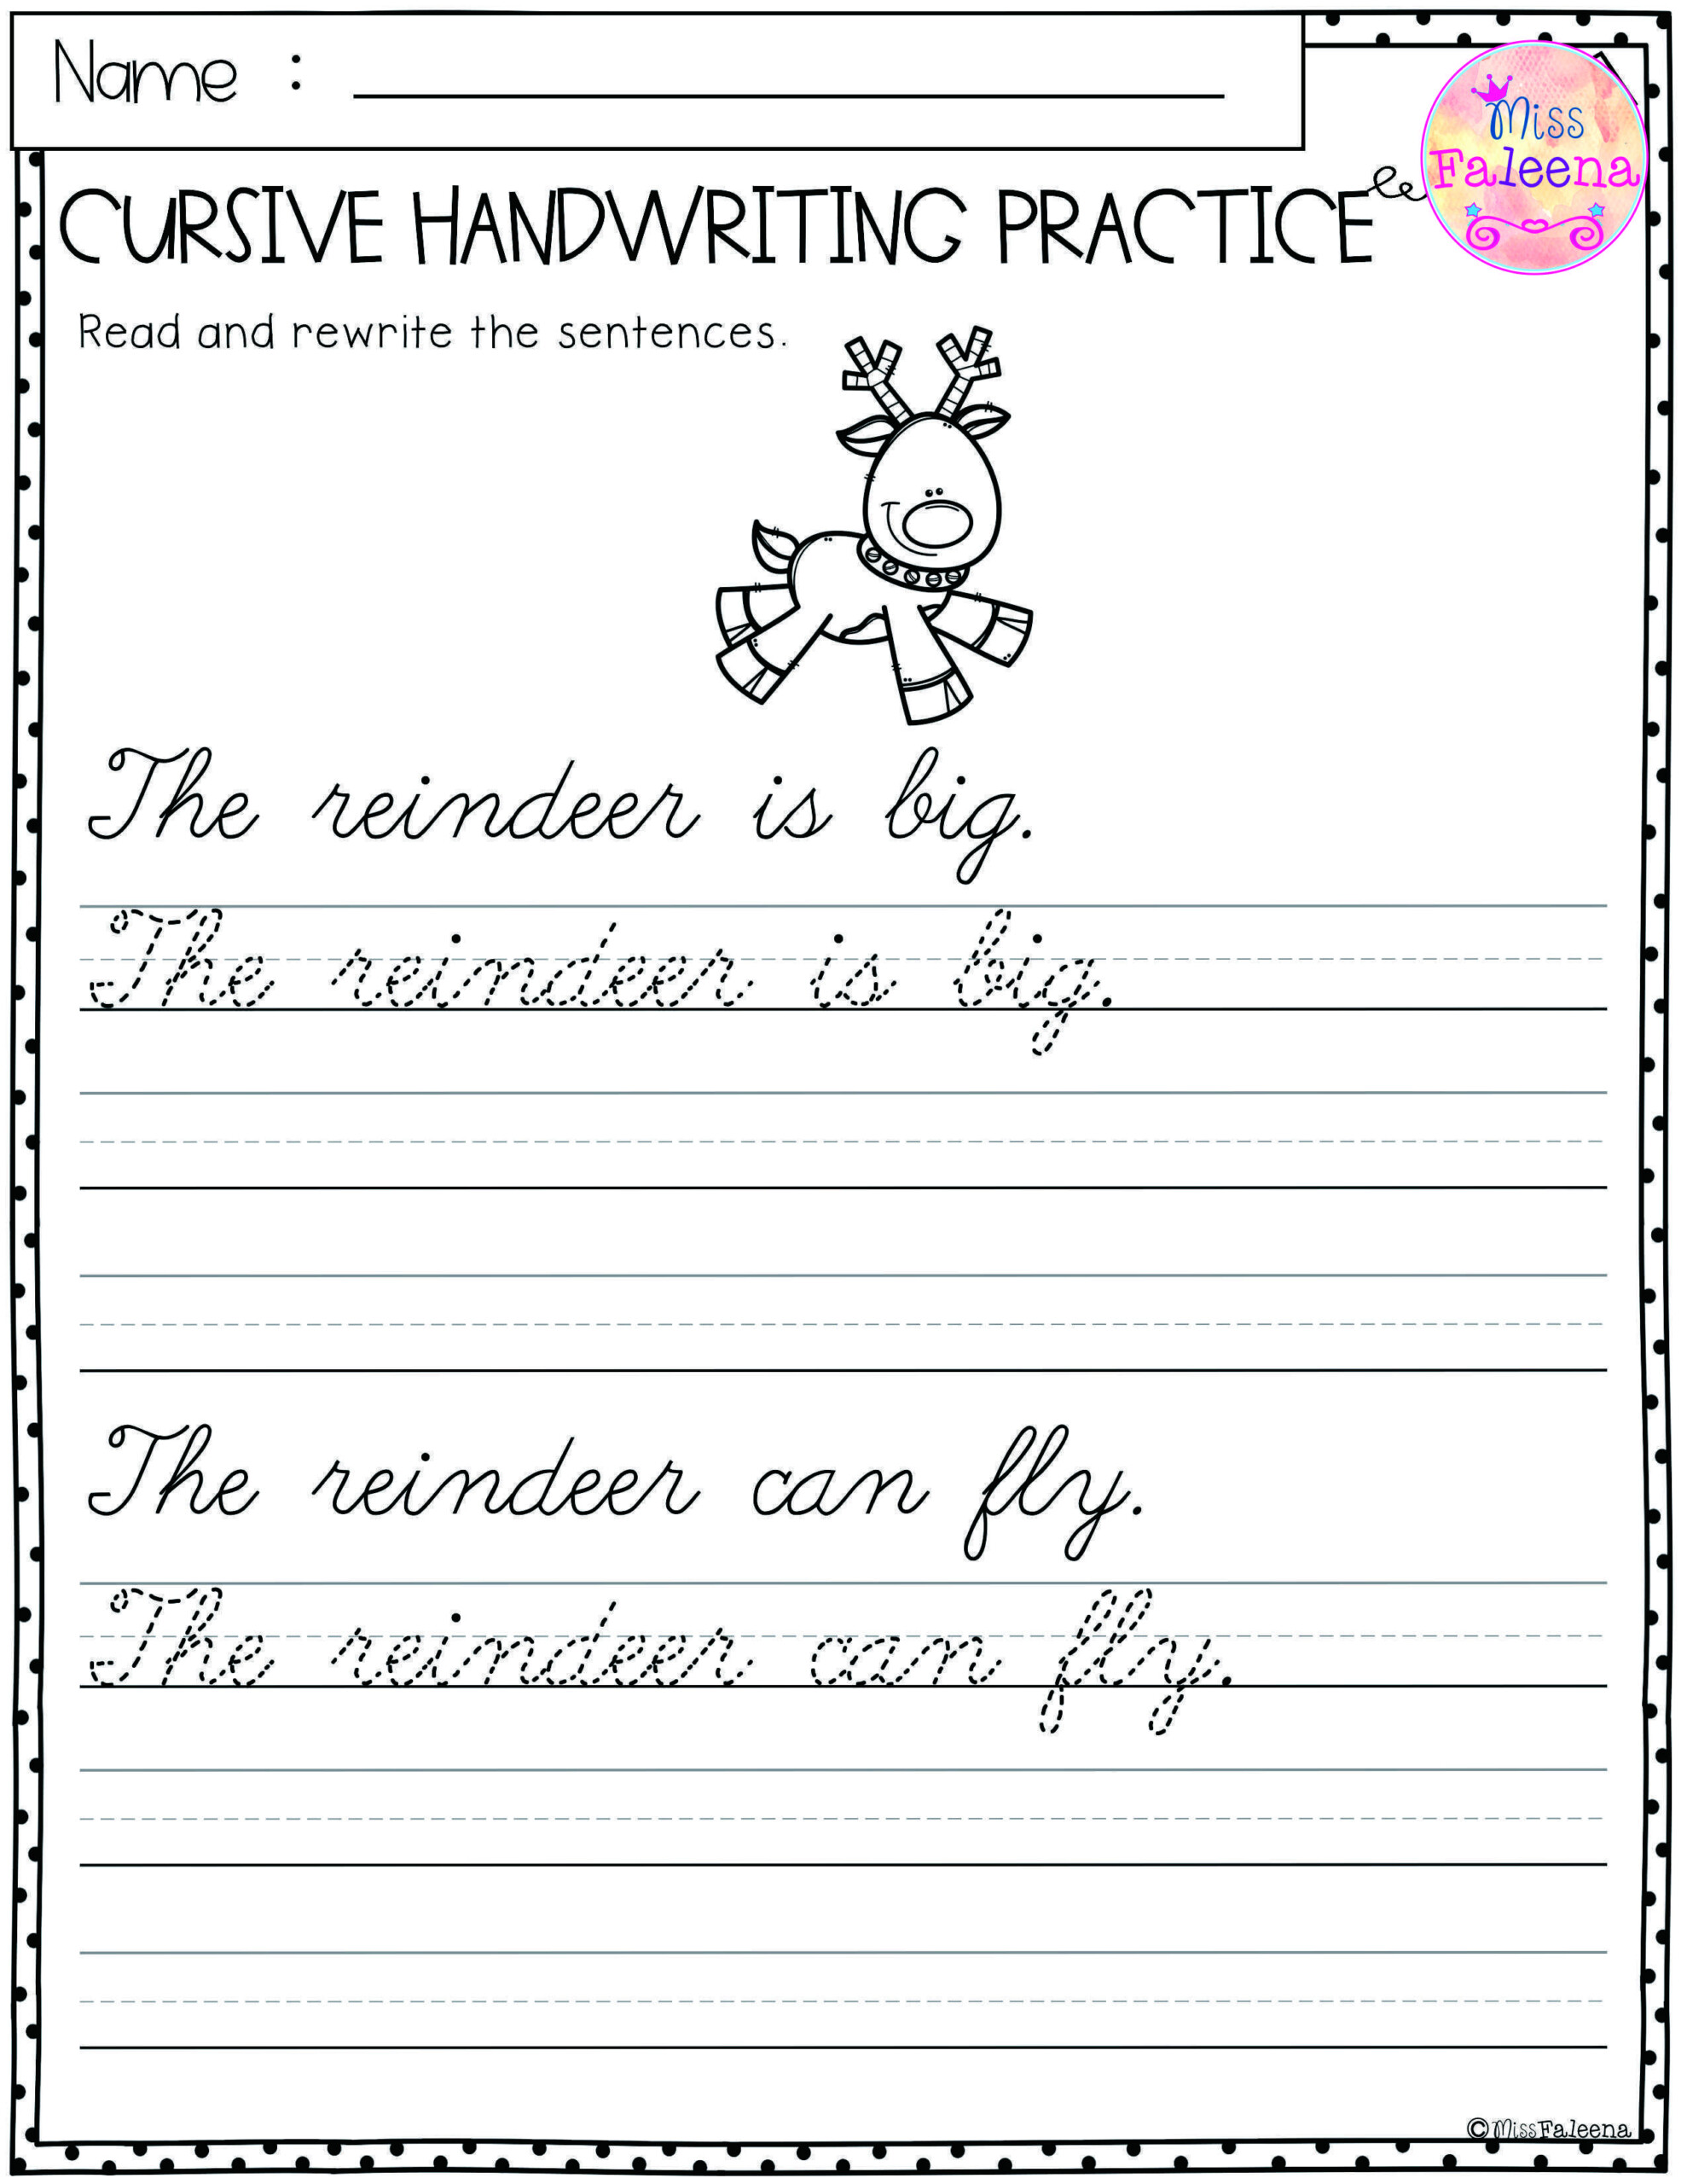 Christmas Cursive Handwriting Practice | Cursive Handwriting